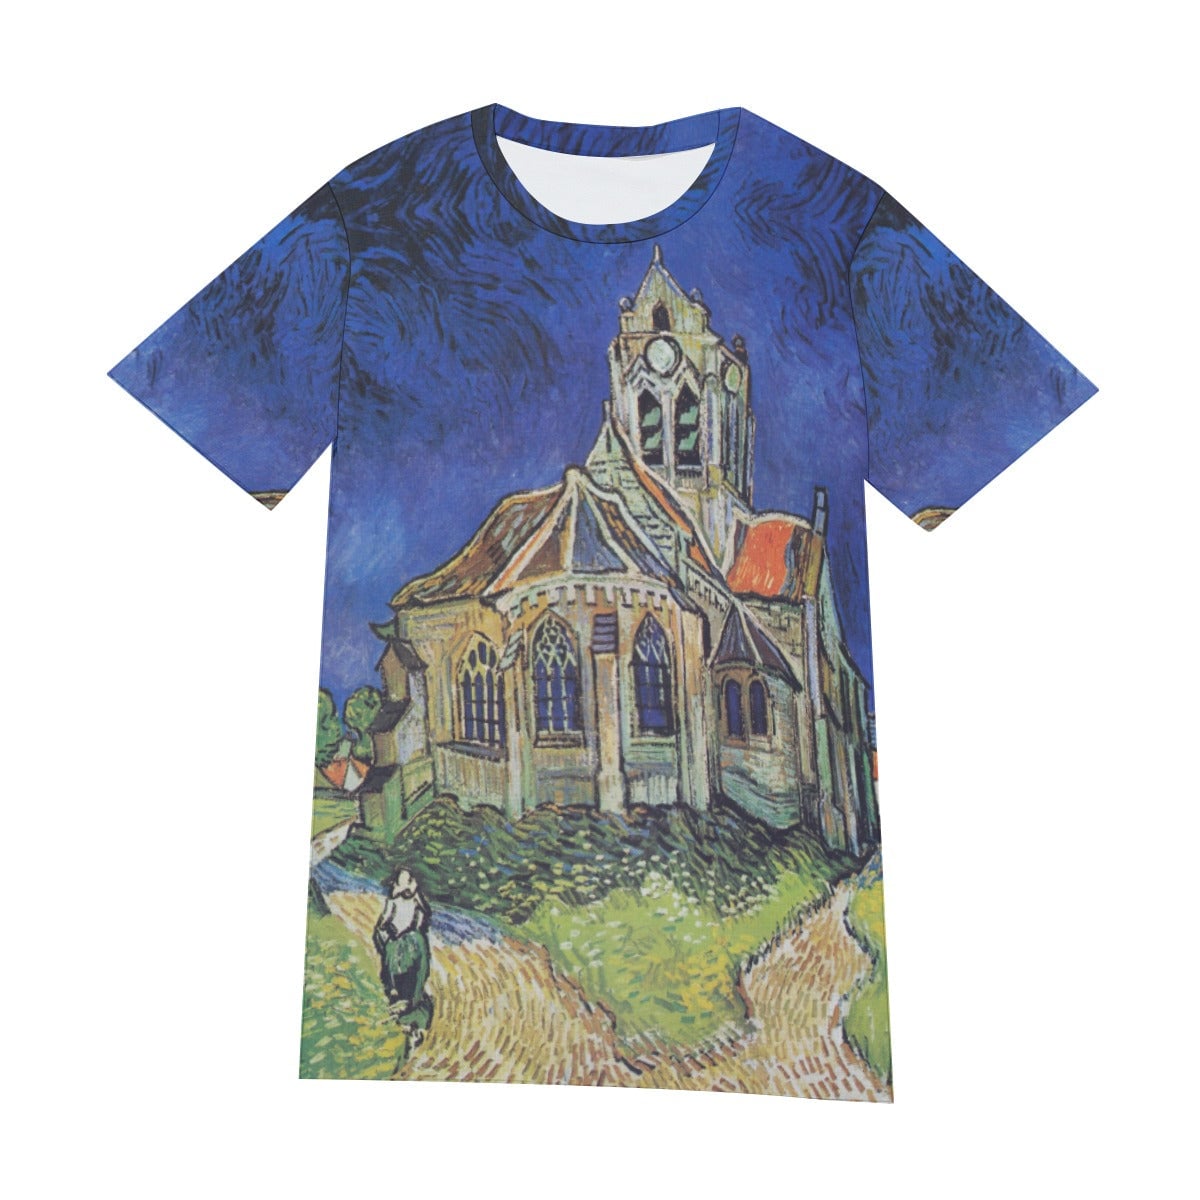 Vincent van Gogh’s The Church at Auvers T-Shirt